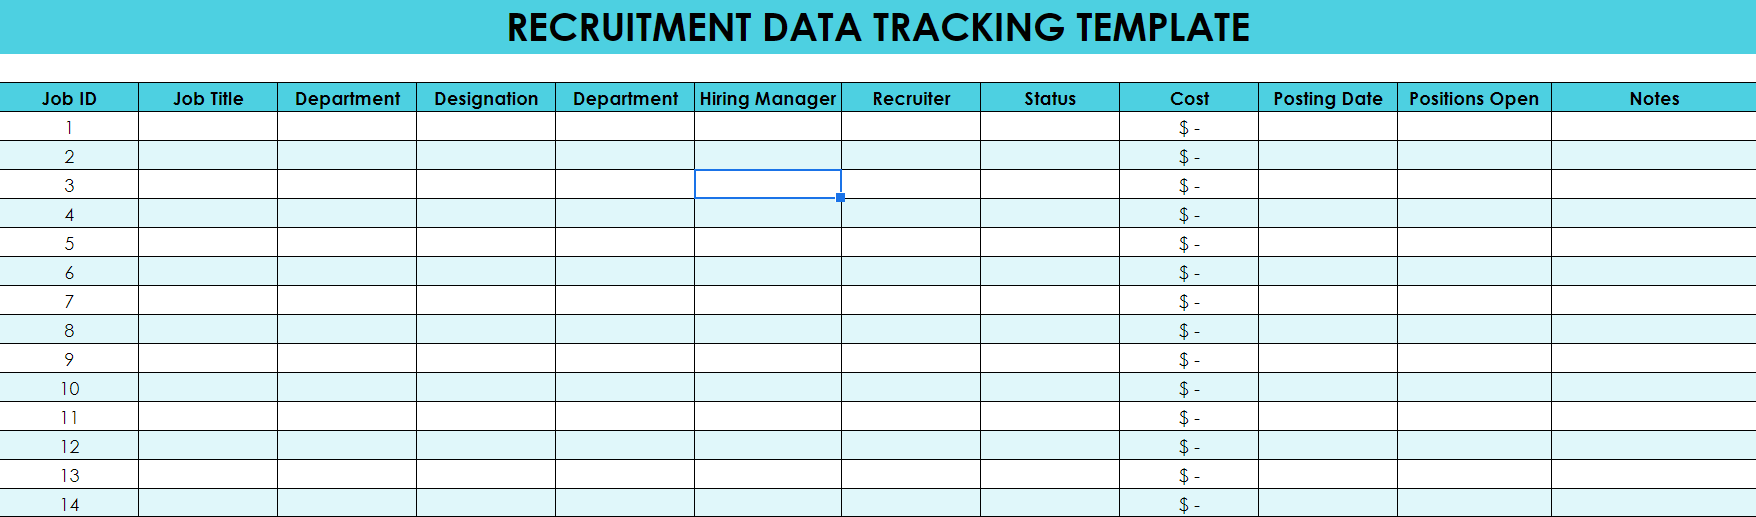 Recruitment Data Tracking Template | JobFairX